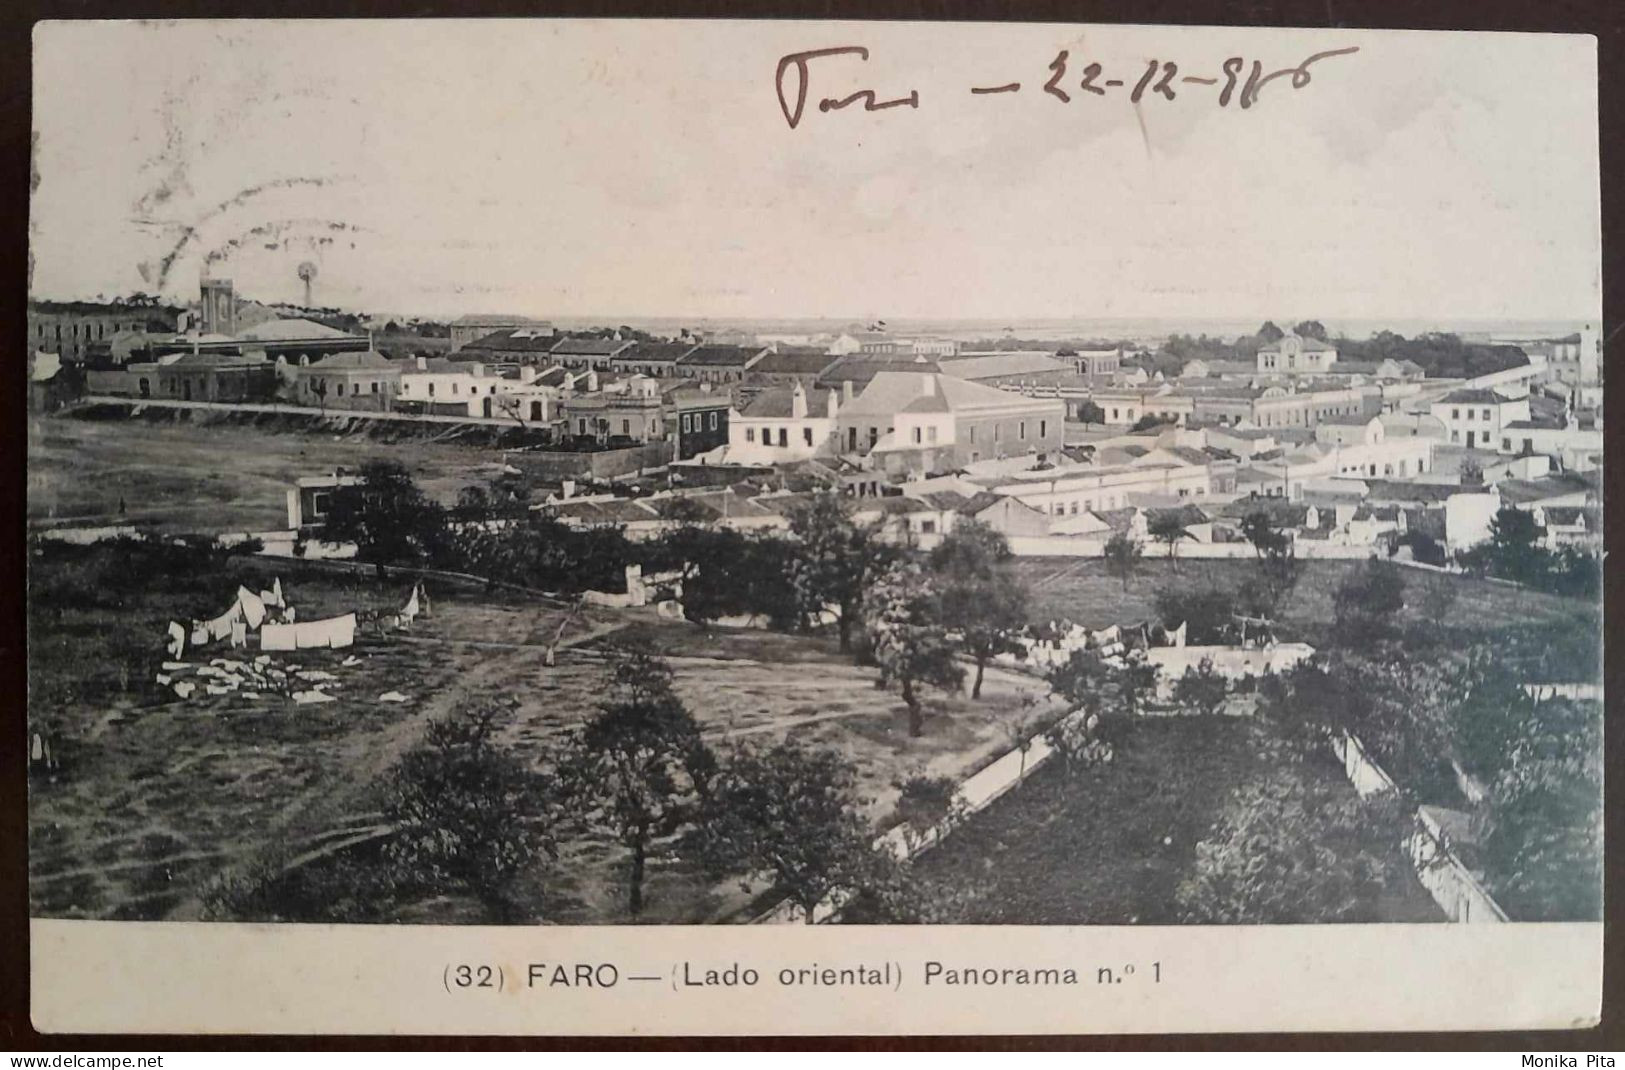 ALGARVE - FARO (32) - (Lado Oriental) Panorama Nº 1 (Edit. Seraphim) Circulado - Faro